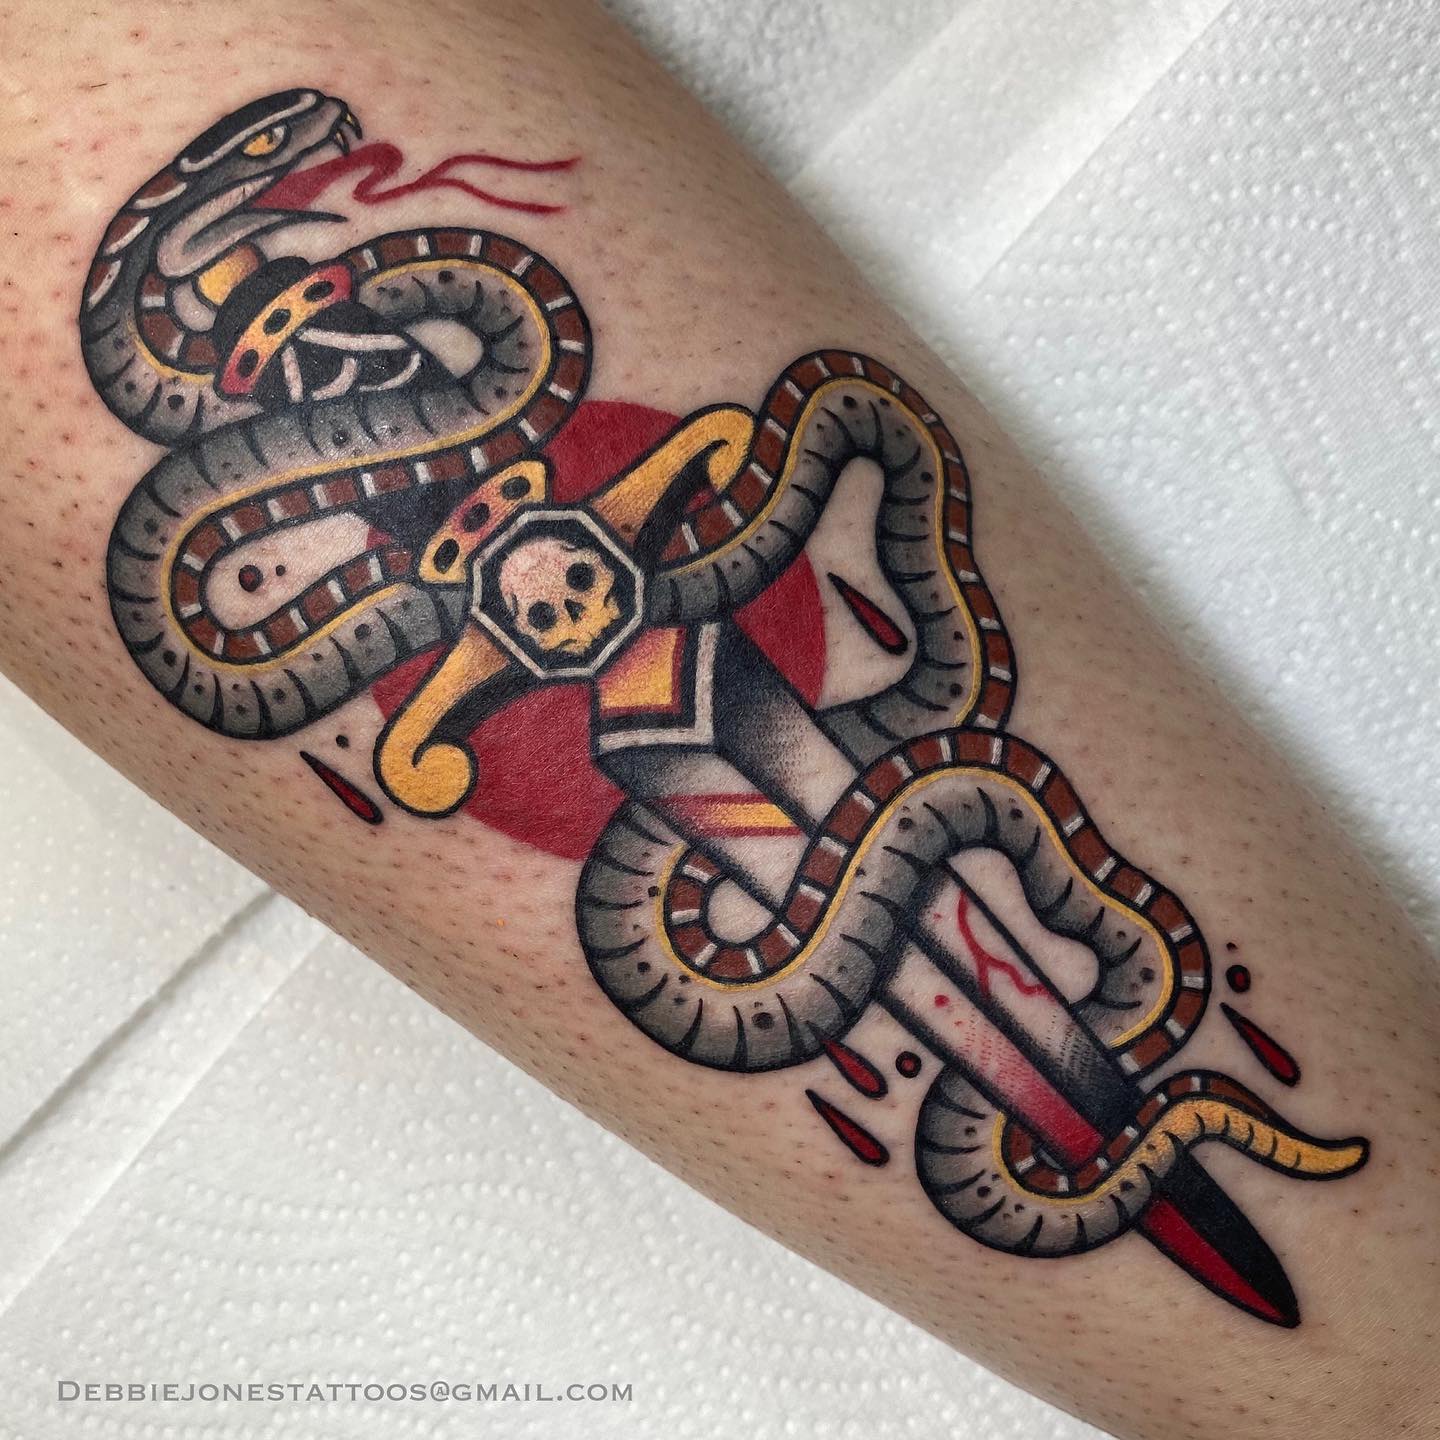 dagger tattoo ideas by debbiejonestattoos